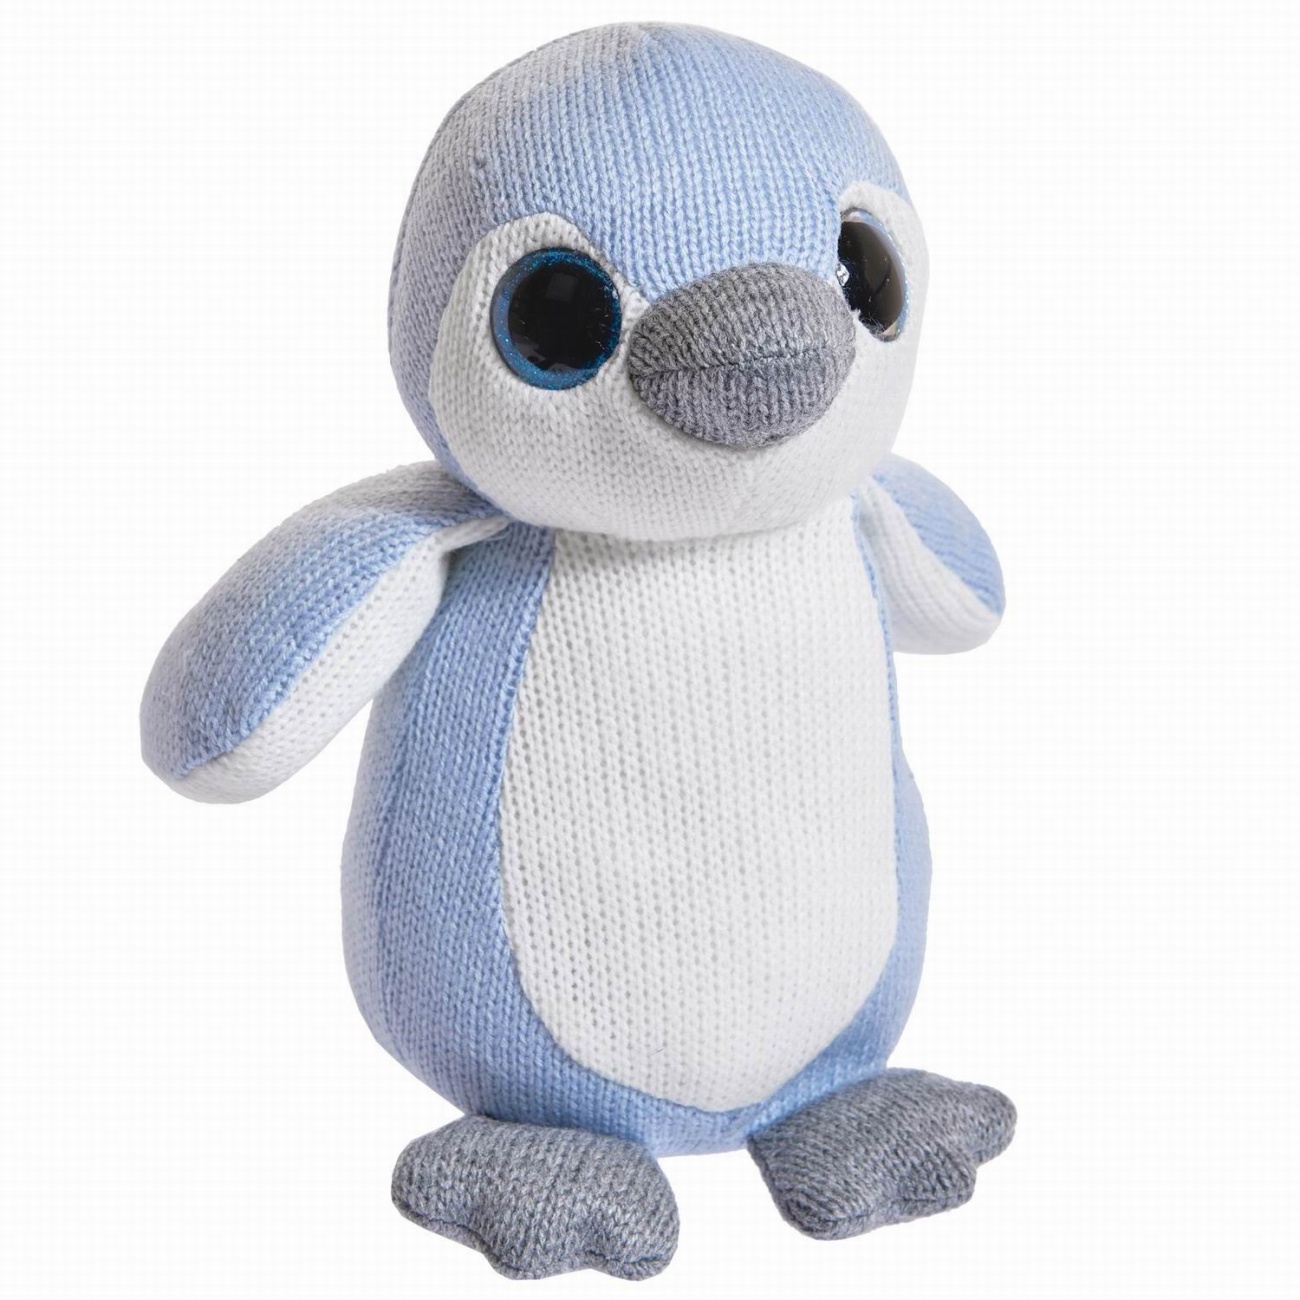 Мягкая игрушка Abtoys Knitted. Пингвин вязаный, 22см M4889